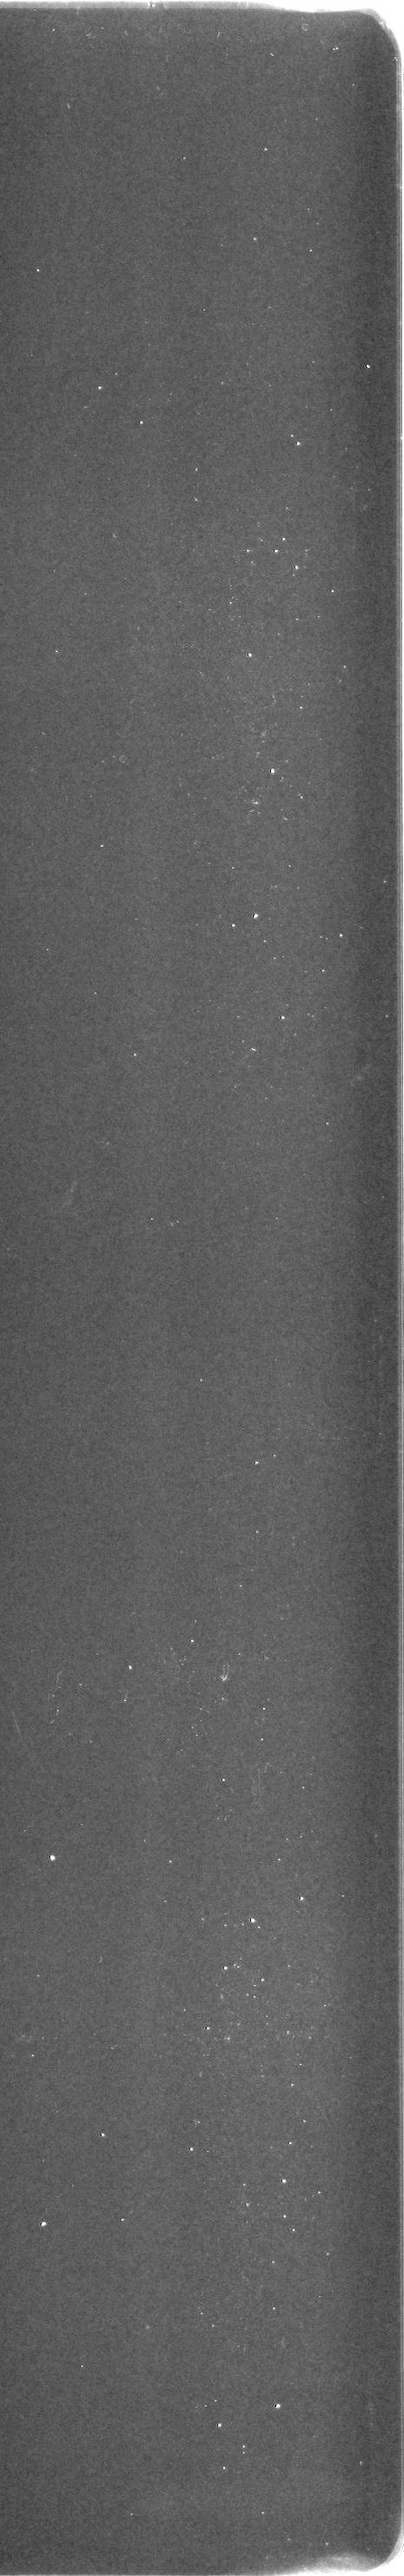 Image B1 - dust.jpg